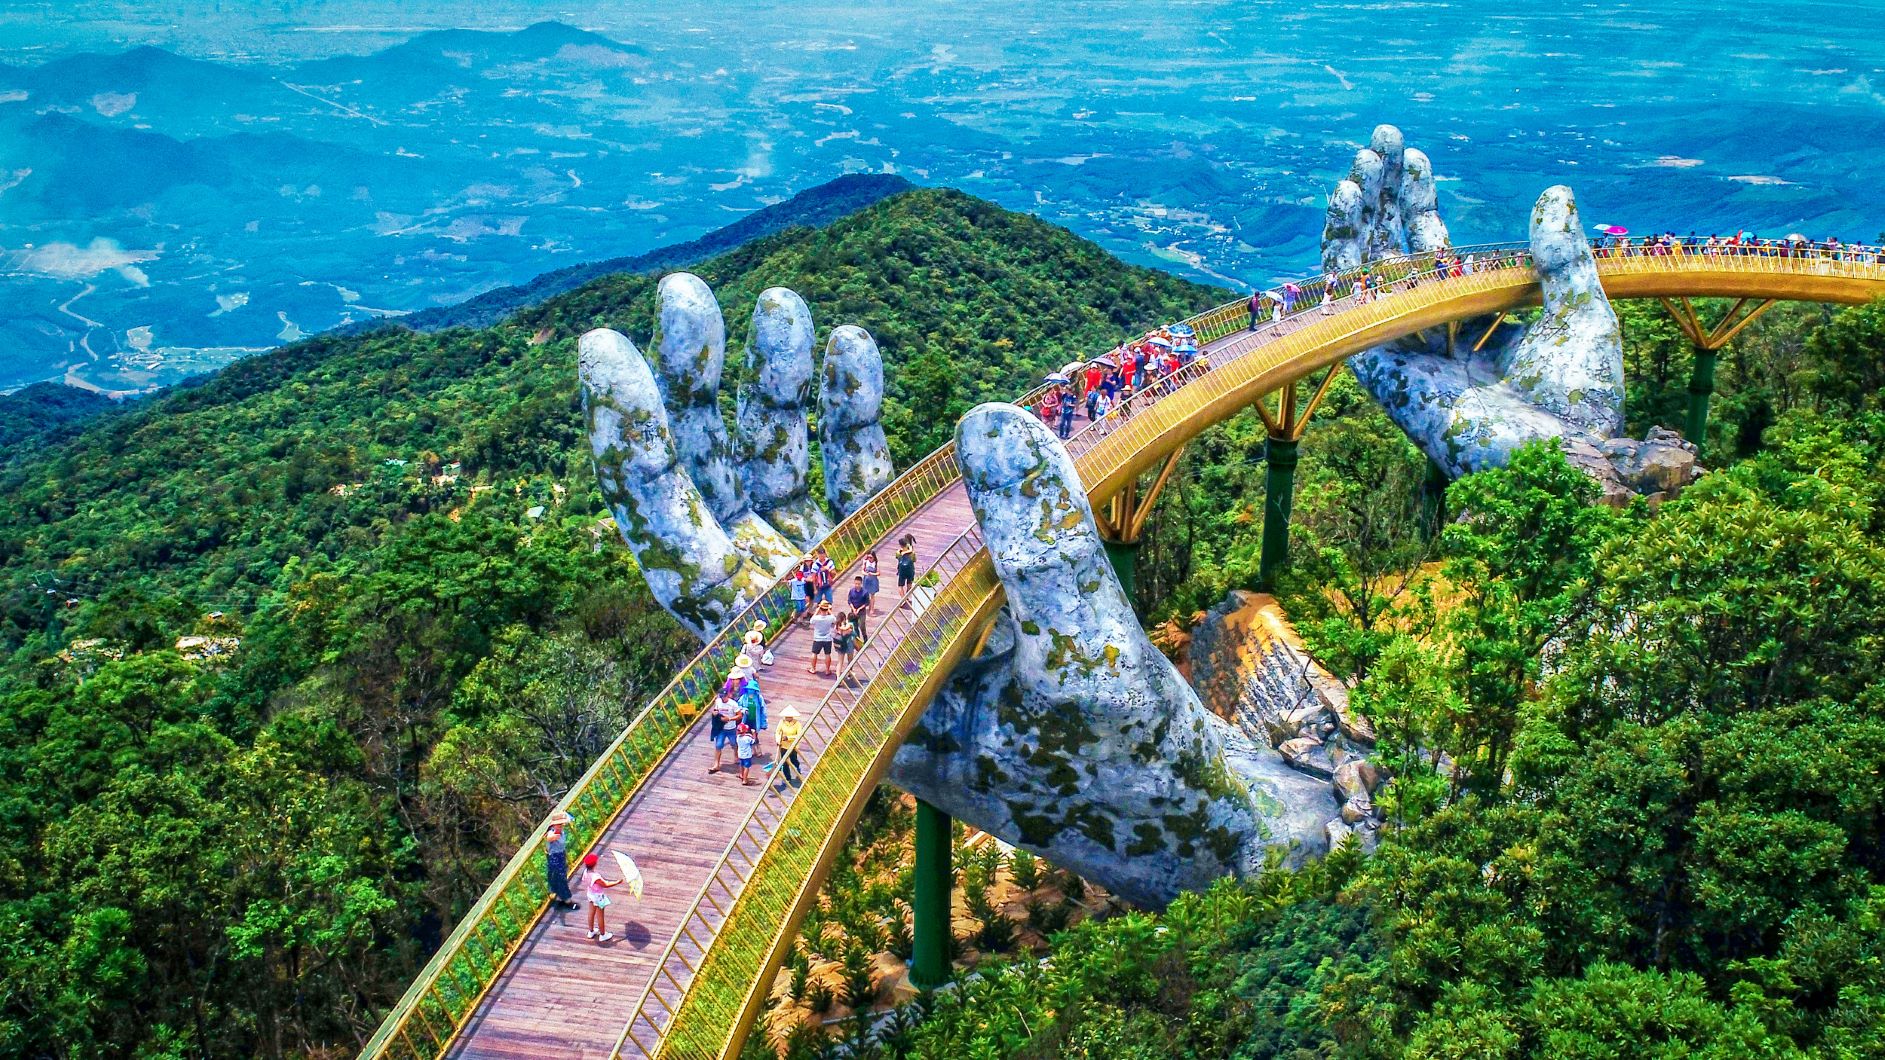  Cau Vang – Fascinantan most u Vijetnamu kojeg drže dvije ruke